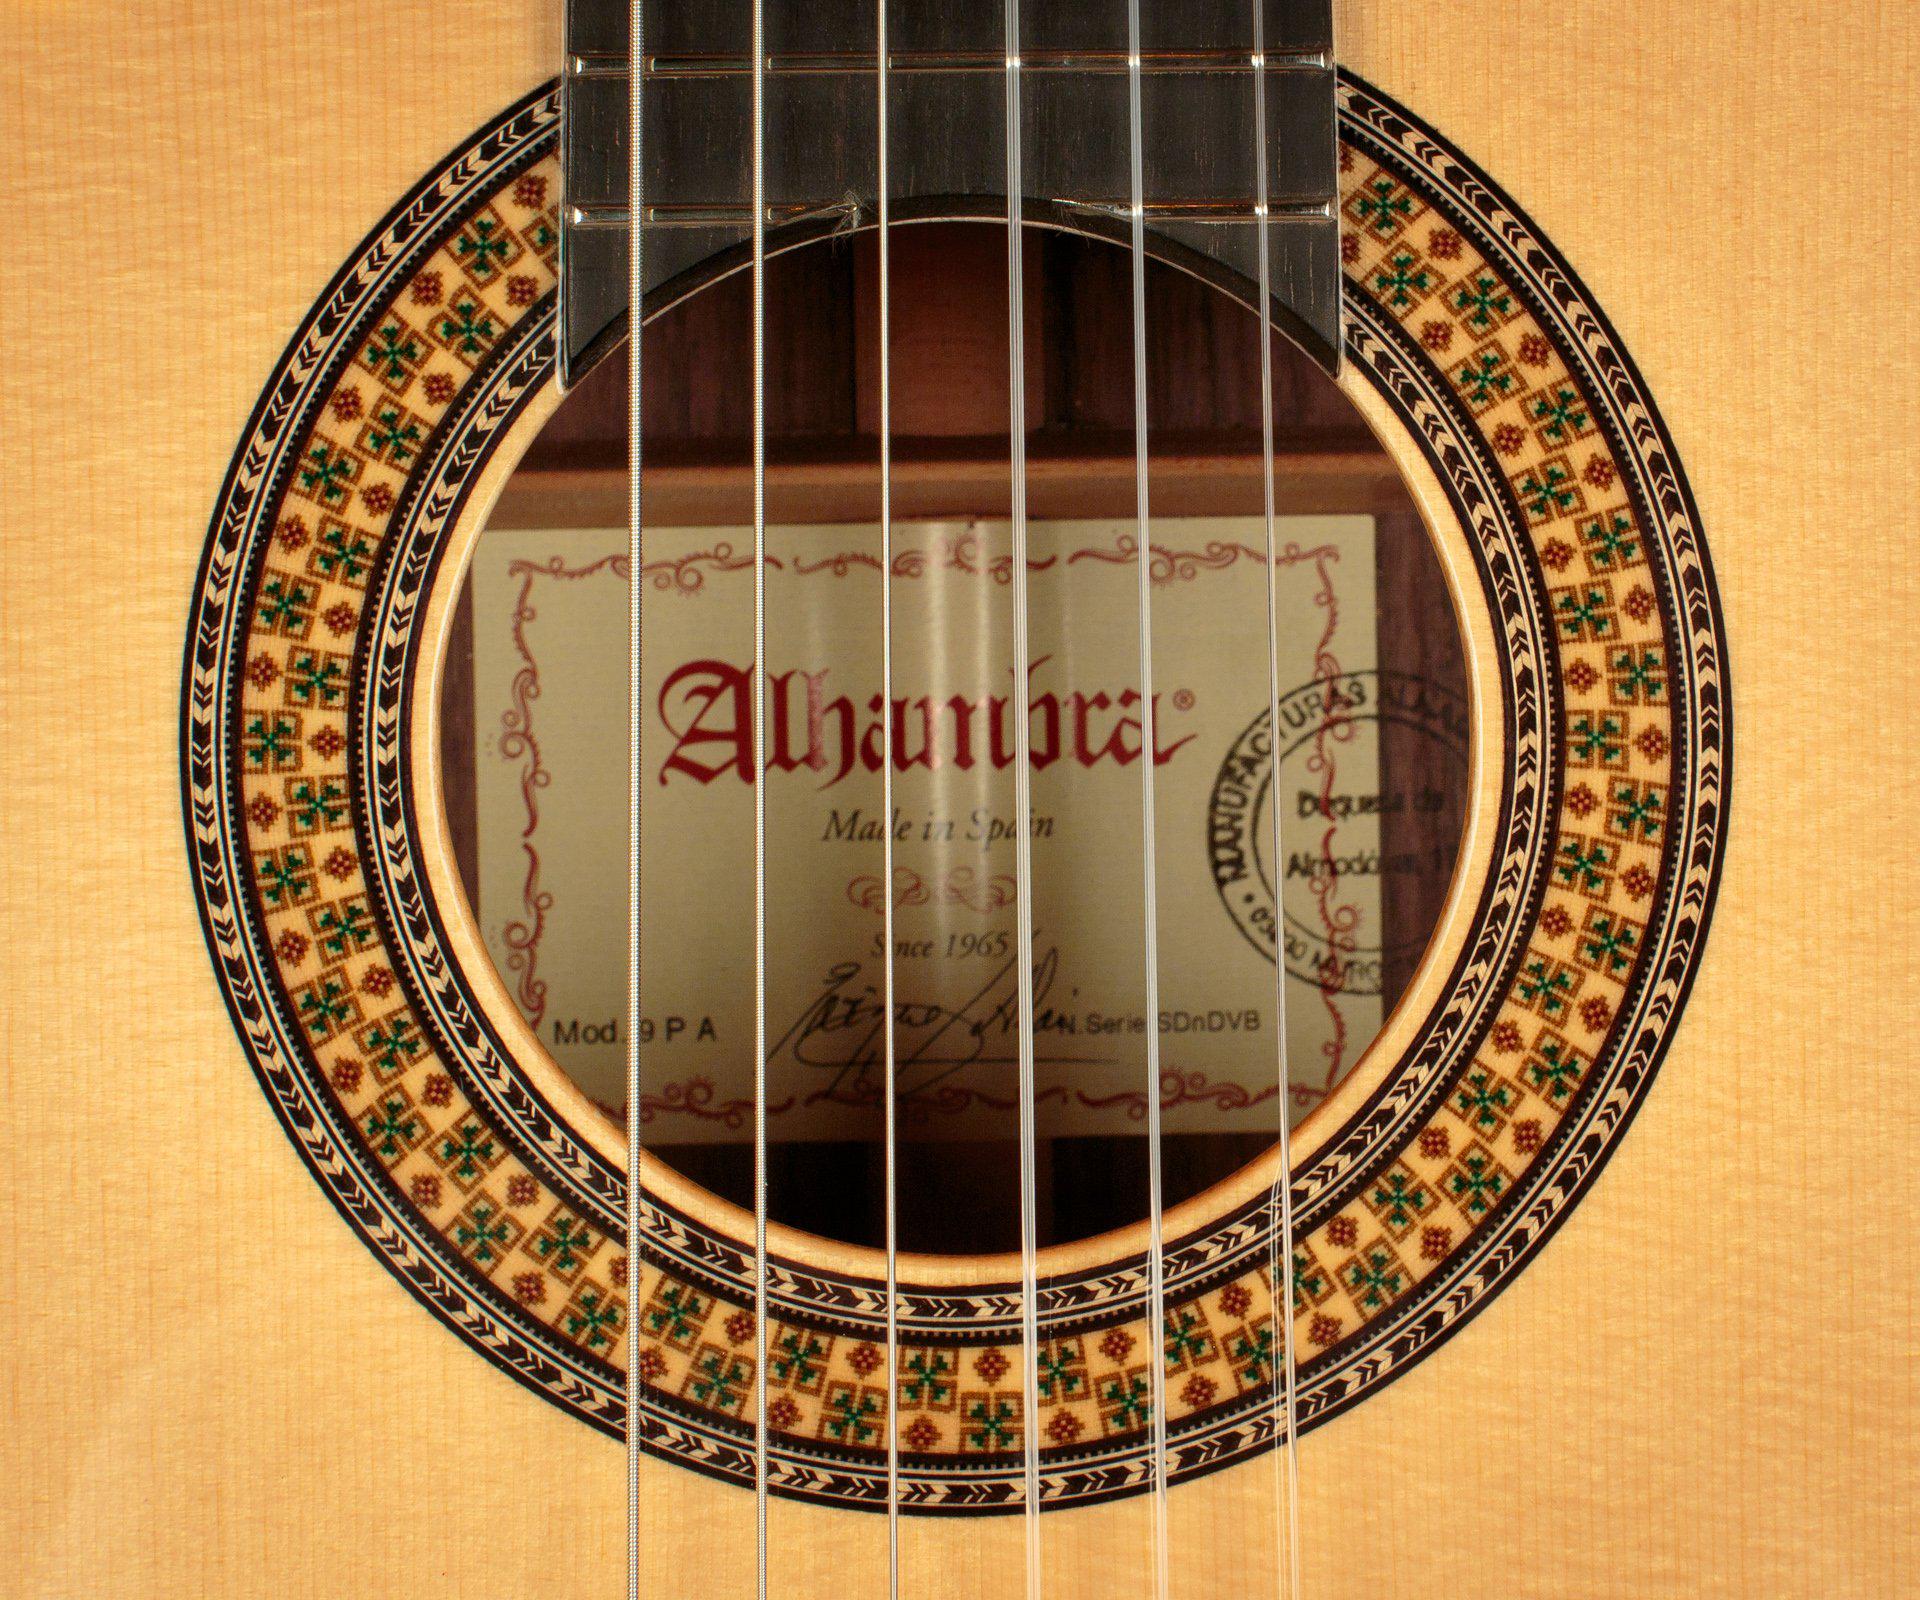 Alhambra 9p Spruce Classical Guitar